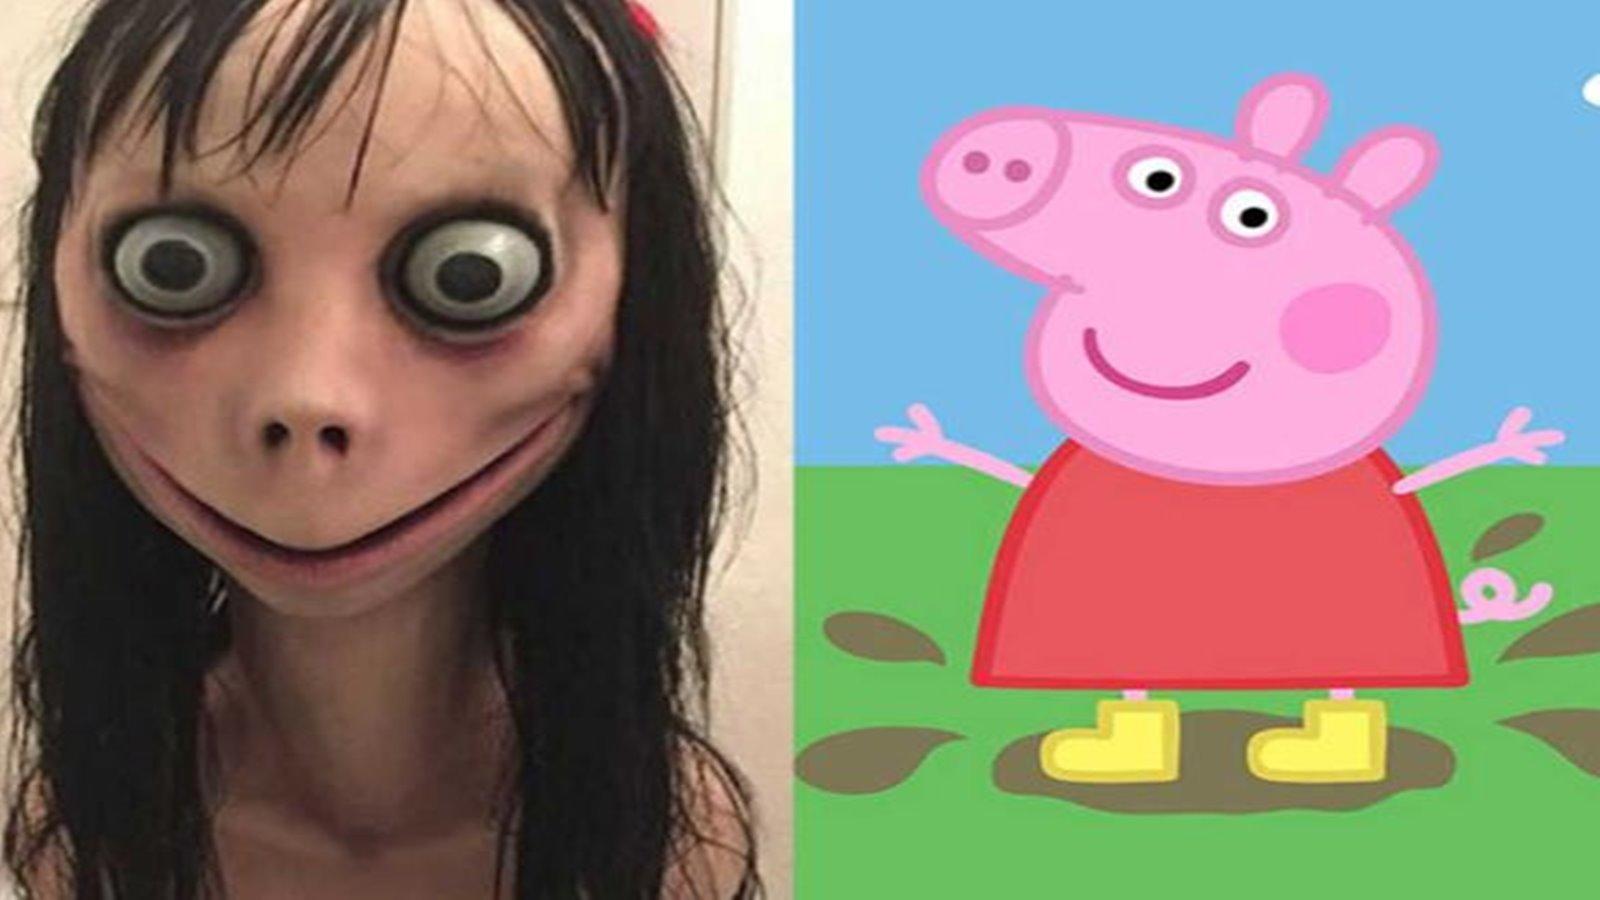 Parents, alert! The dangerous Momo challenge has hacked Peppa Pig